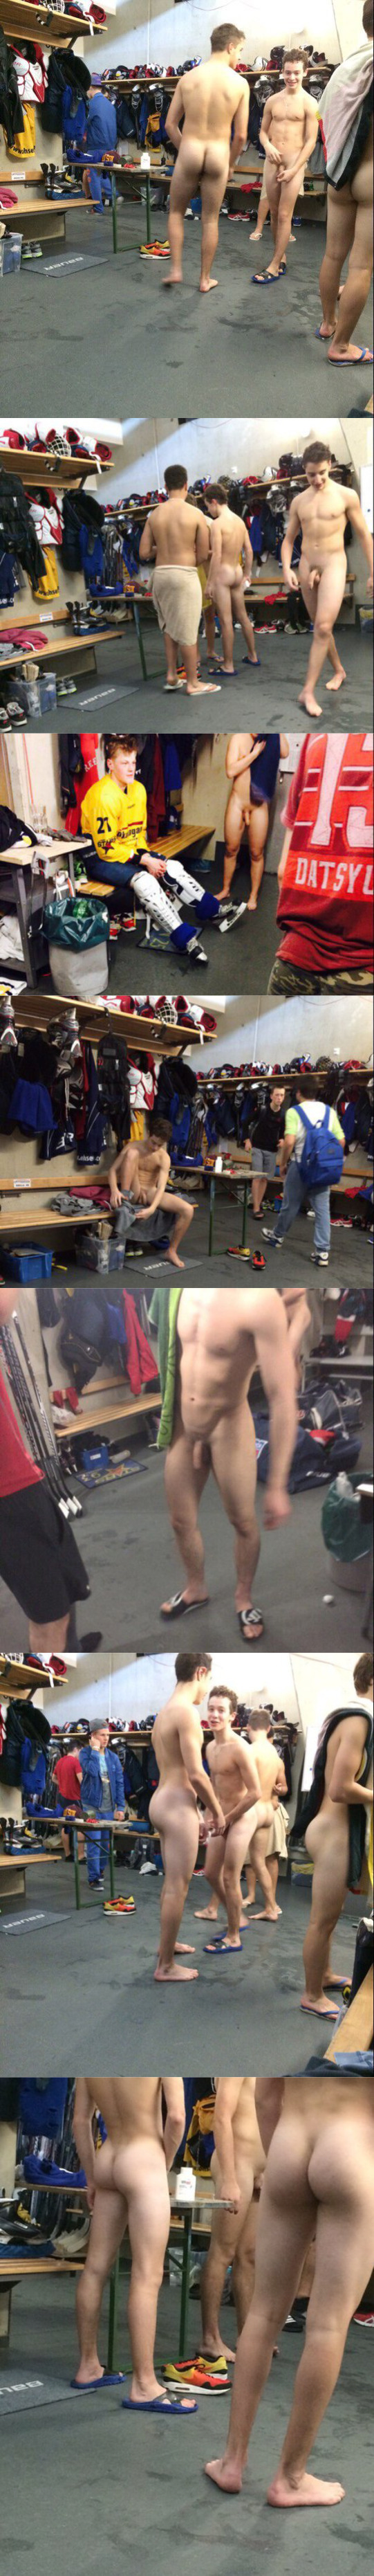 guys caught naked lockerroom showing asses dicks spycam